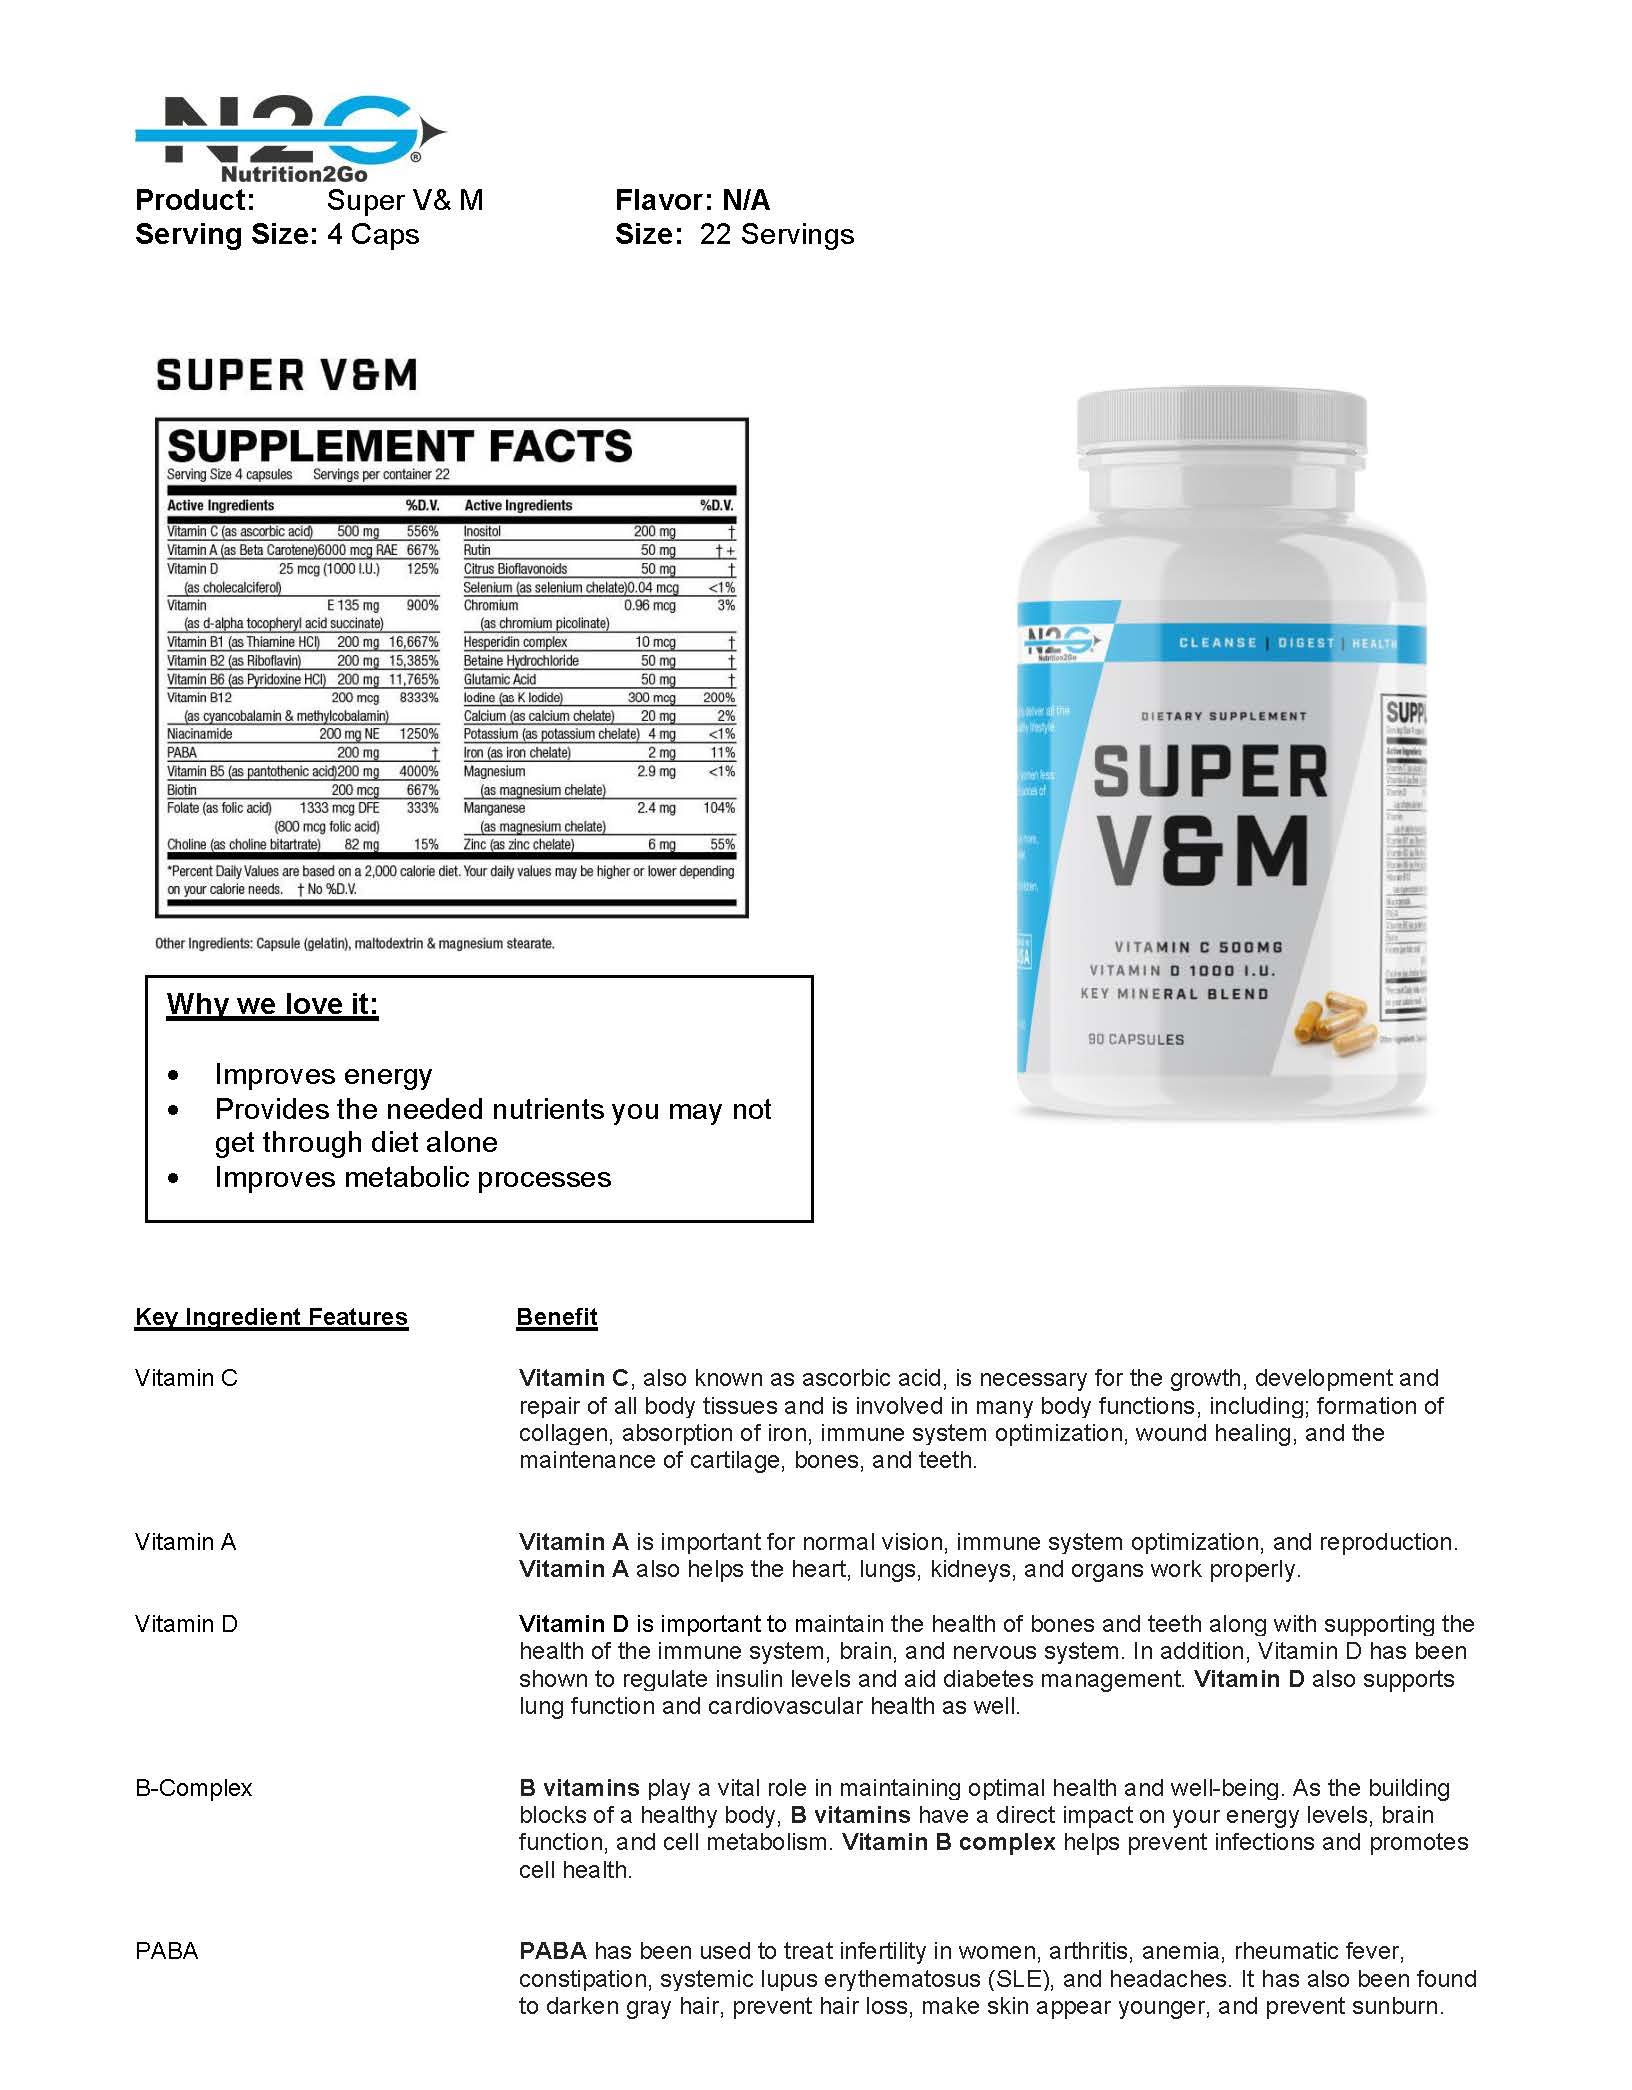 N2G Super V&M Fact Sheet